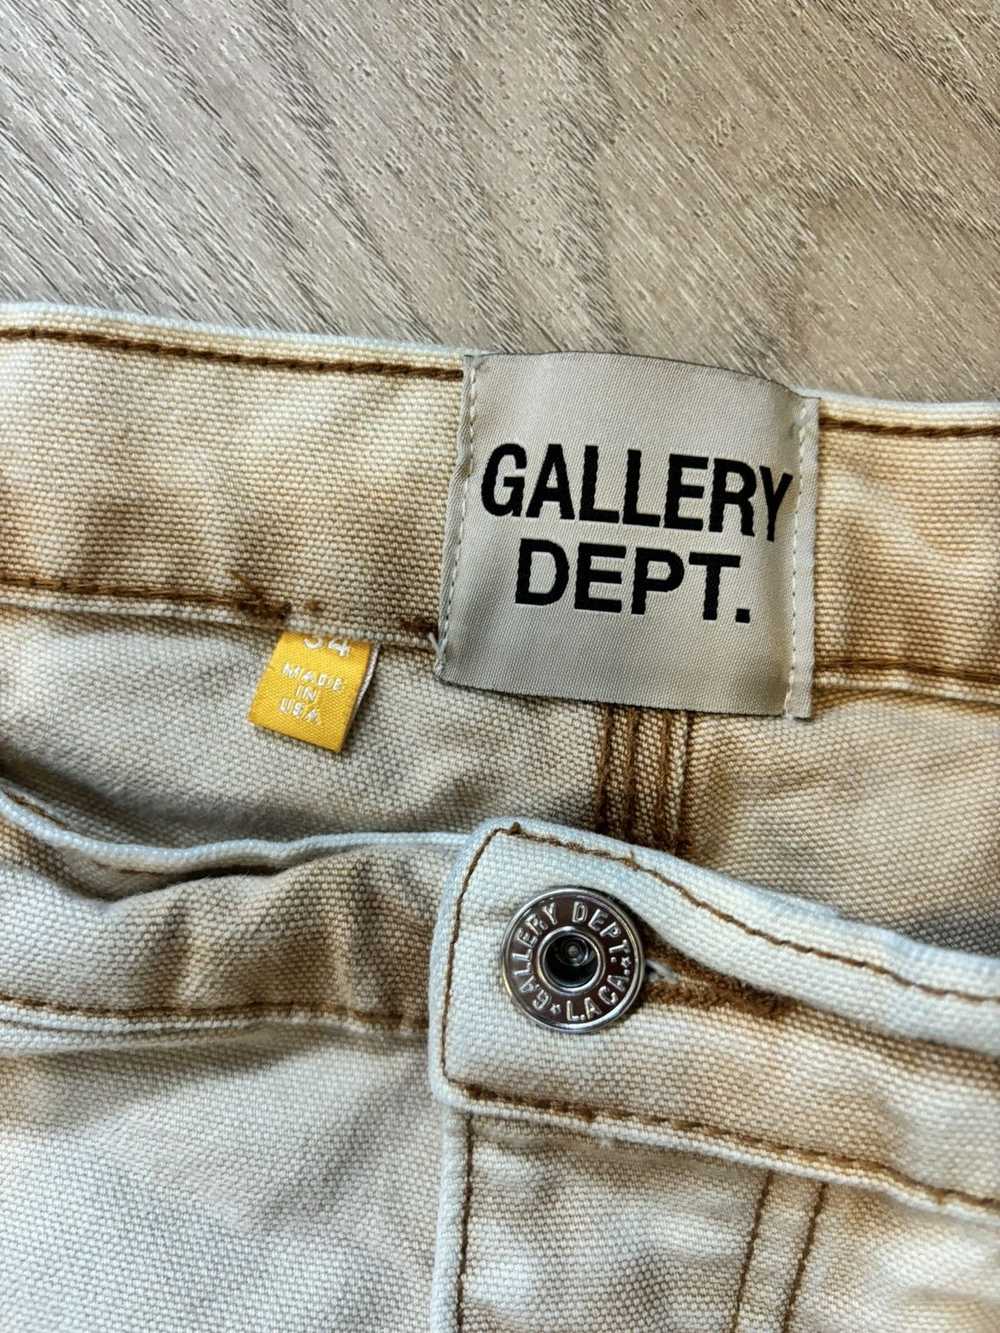 Gallery Dept. Gallery Dept. carpenter shorts - image 4